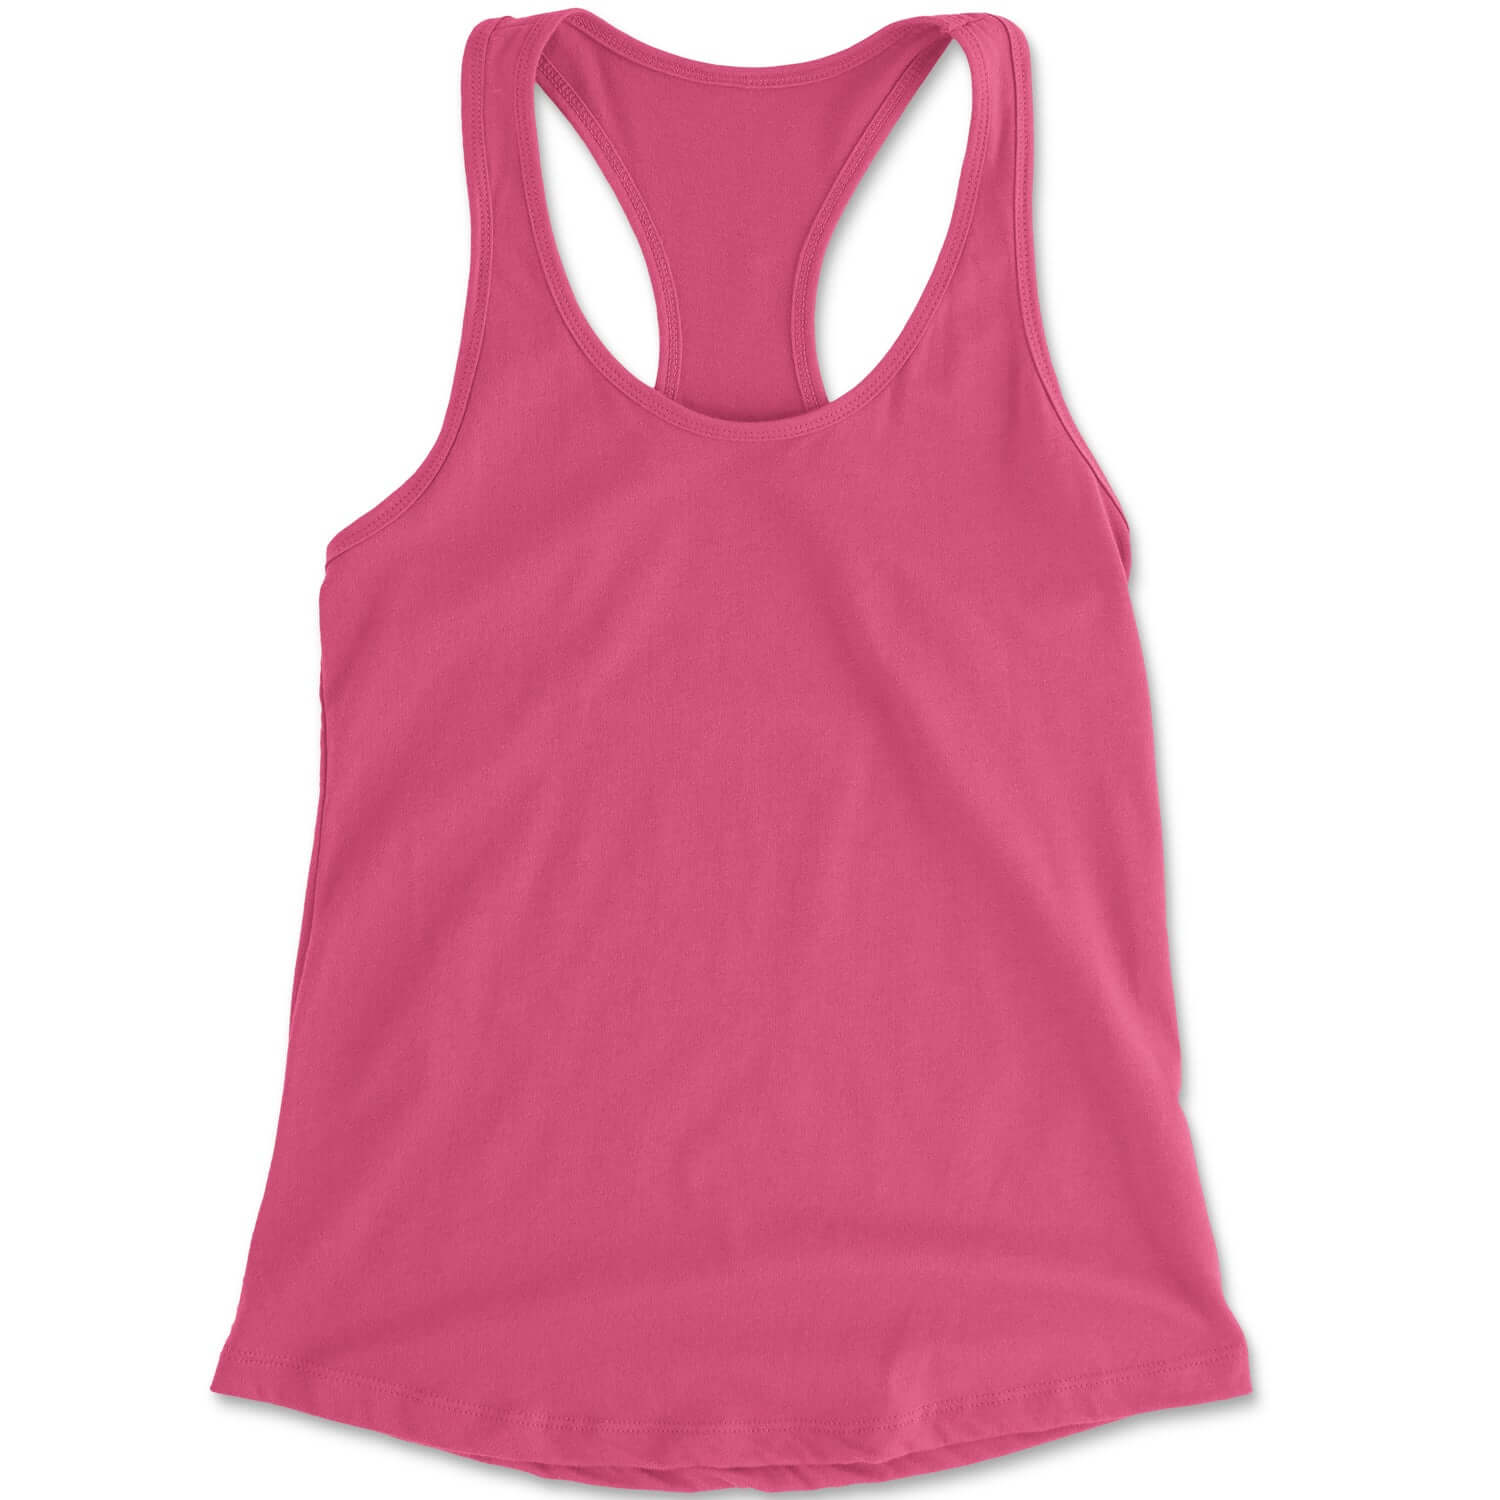 Basics - Plain Blank Racerback Tank Top for Women blank, clothing, plain, tshirts by Expression Tees